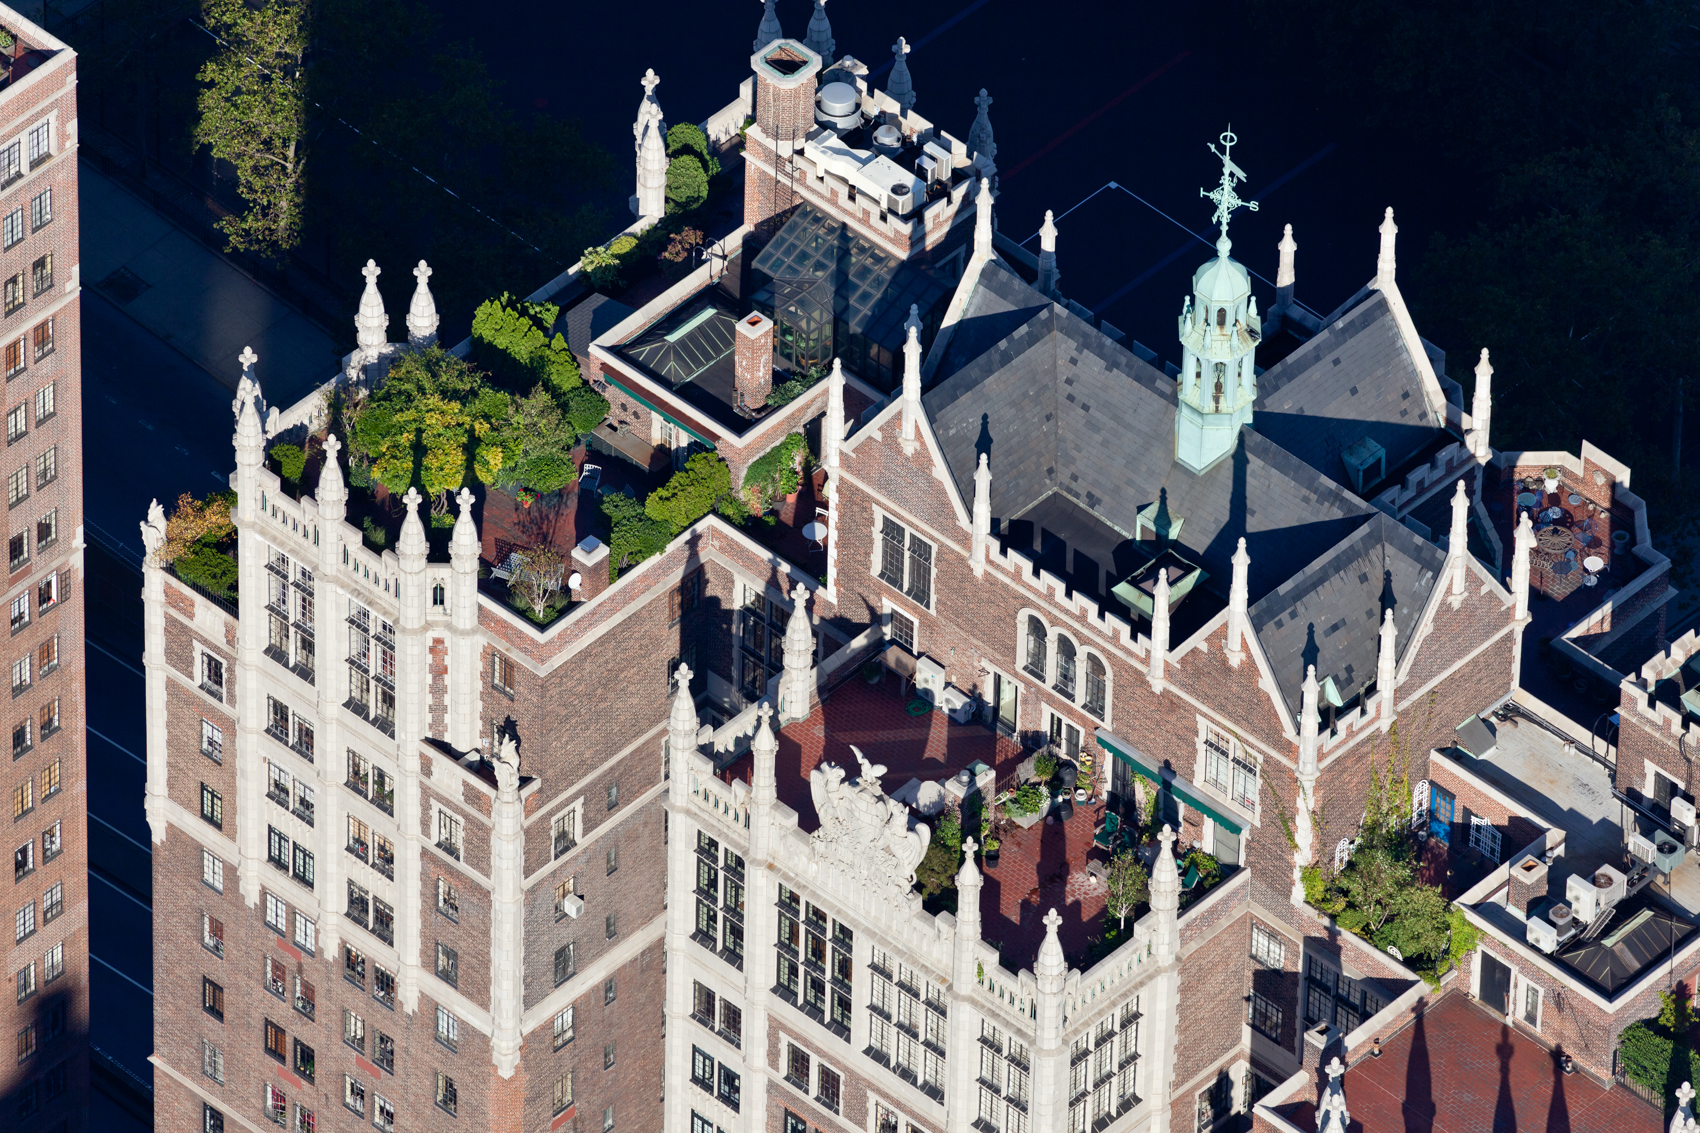 Winsor Tower, 5 Tudor City Pl, Murray Hill, Manhattan, NY, 10022, 40.74821,-73.970824, Tudor City, Manhattan: A mid-rise apartment building topped with terrace gardens detailed with Tudor style flourishes.